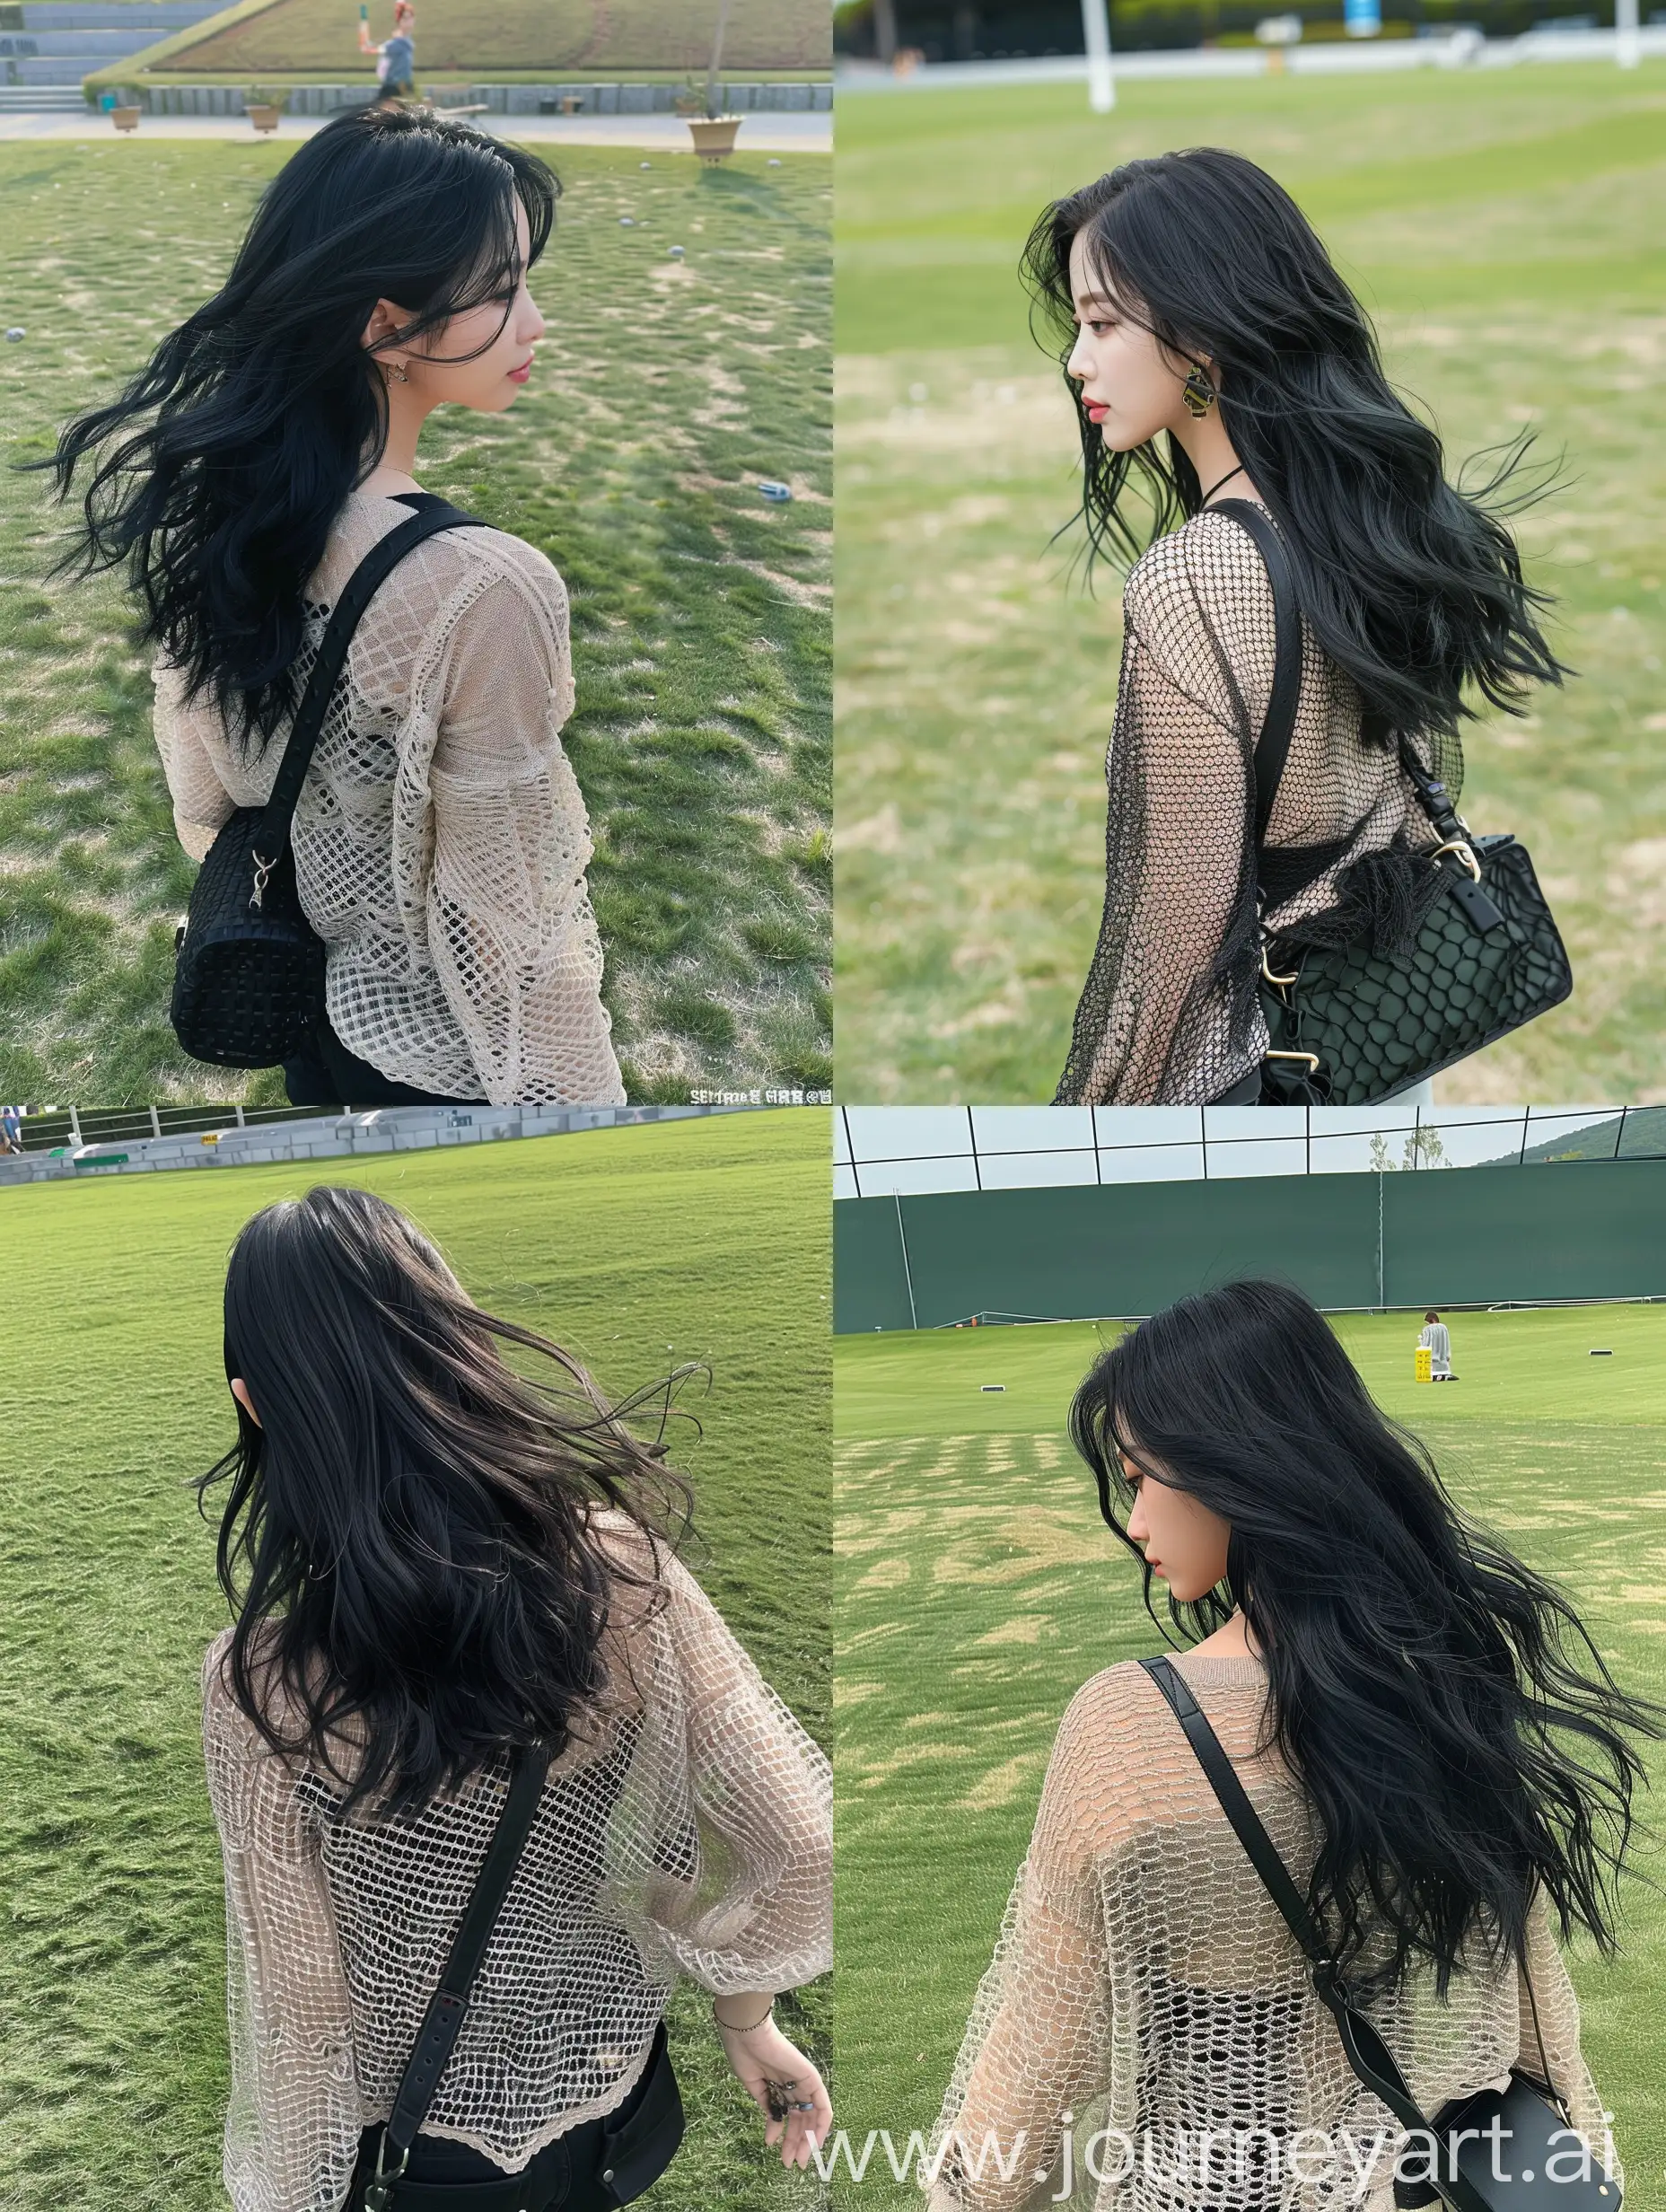  aestethic selfie, blackpink's jennie, walking on a grass, back body, medium black hair, wavy,  wearing net cardigan, black shoulder bag --ar 3:4